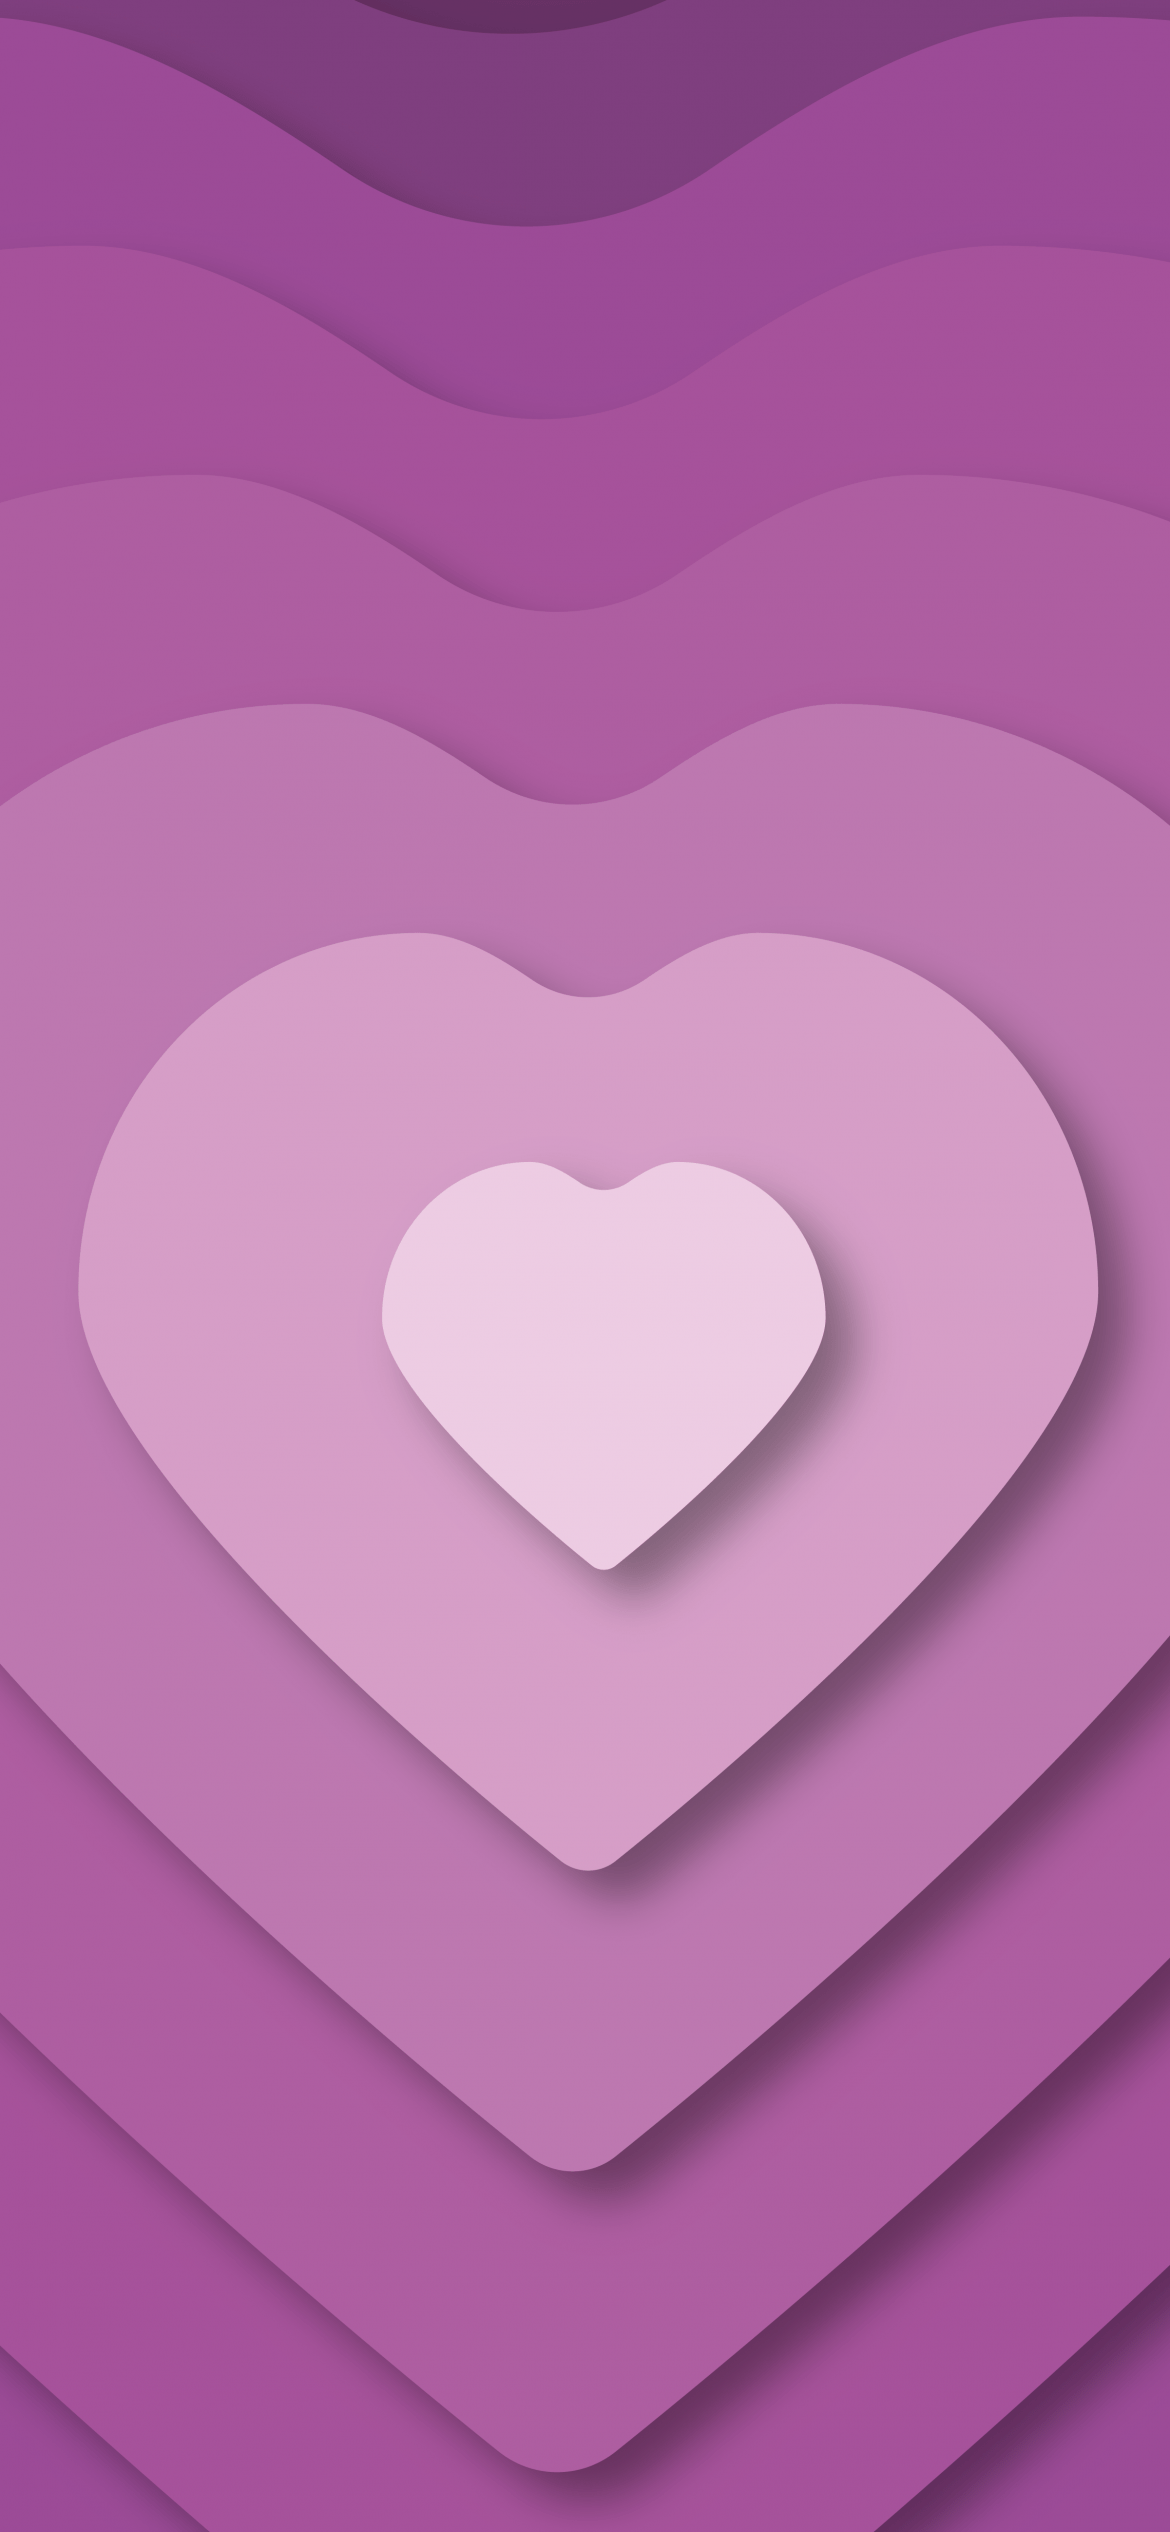 Love hearts Wallpaper 4K, Heart Background